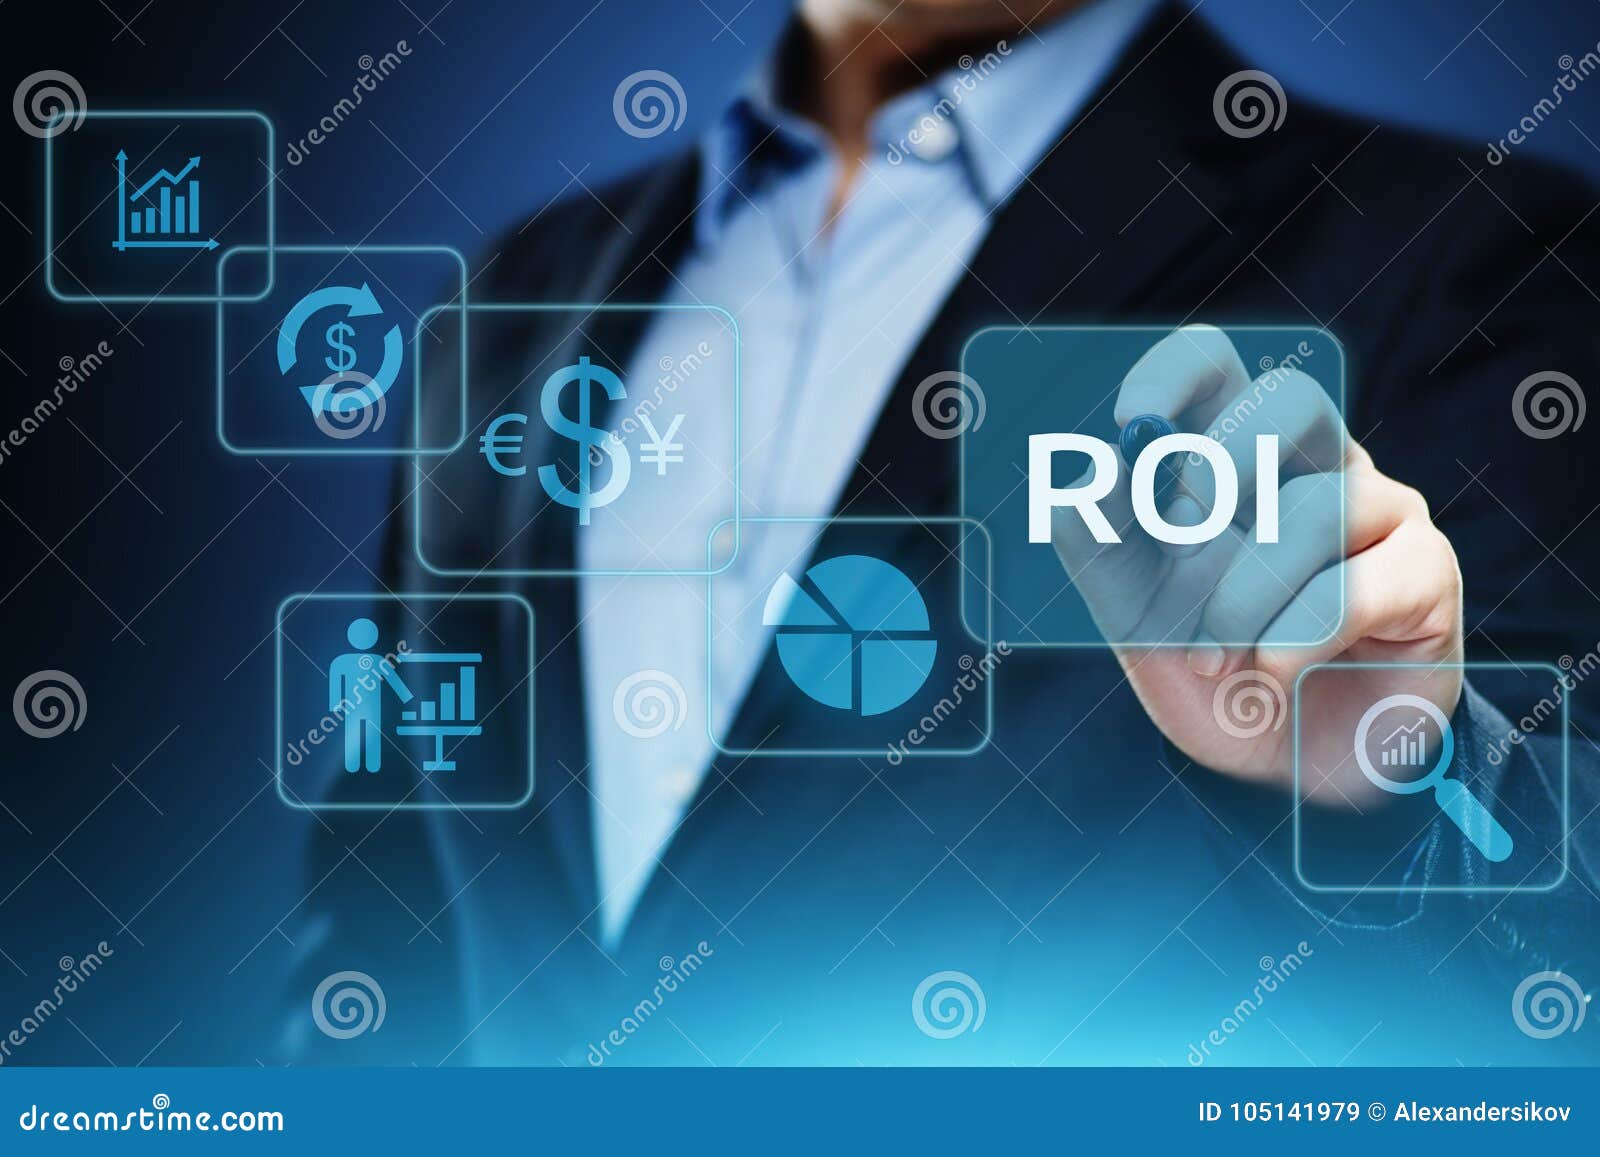 roi return on investment finance profit success internet business technology concept